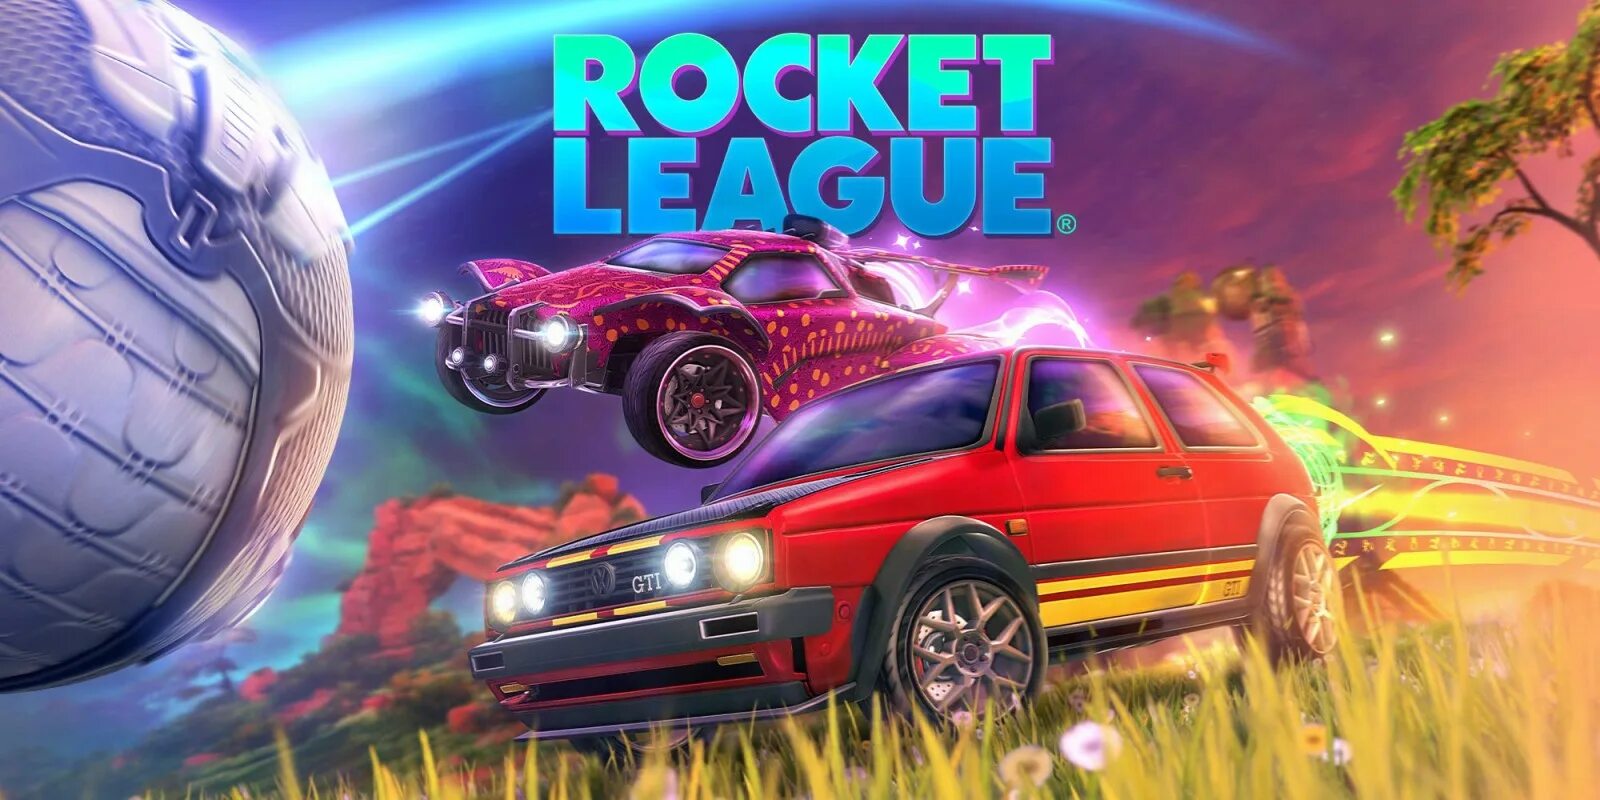 Рокет лига. Golf GTI Rocket League. Rocket x игра. Epic games rocket